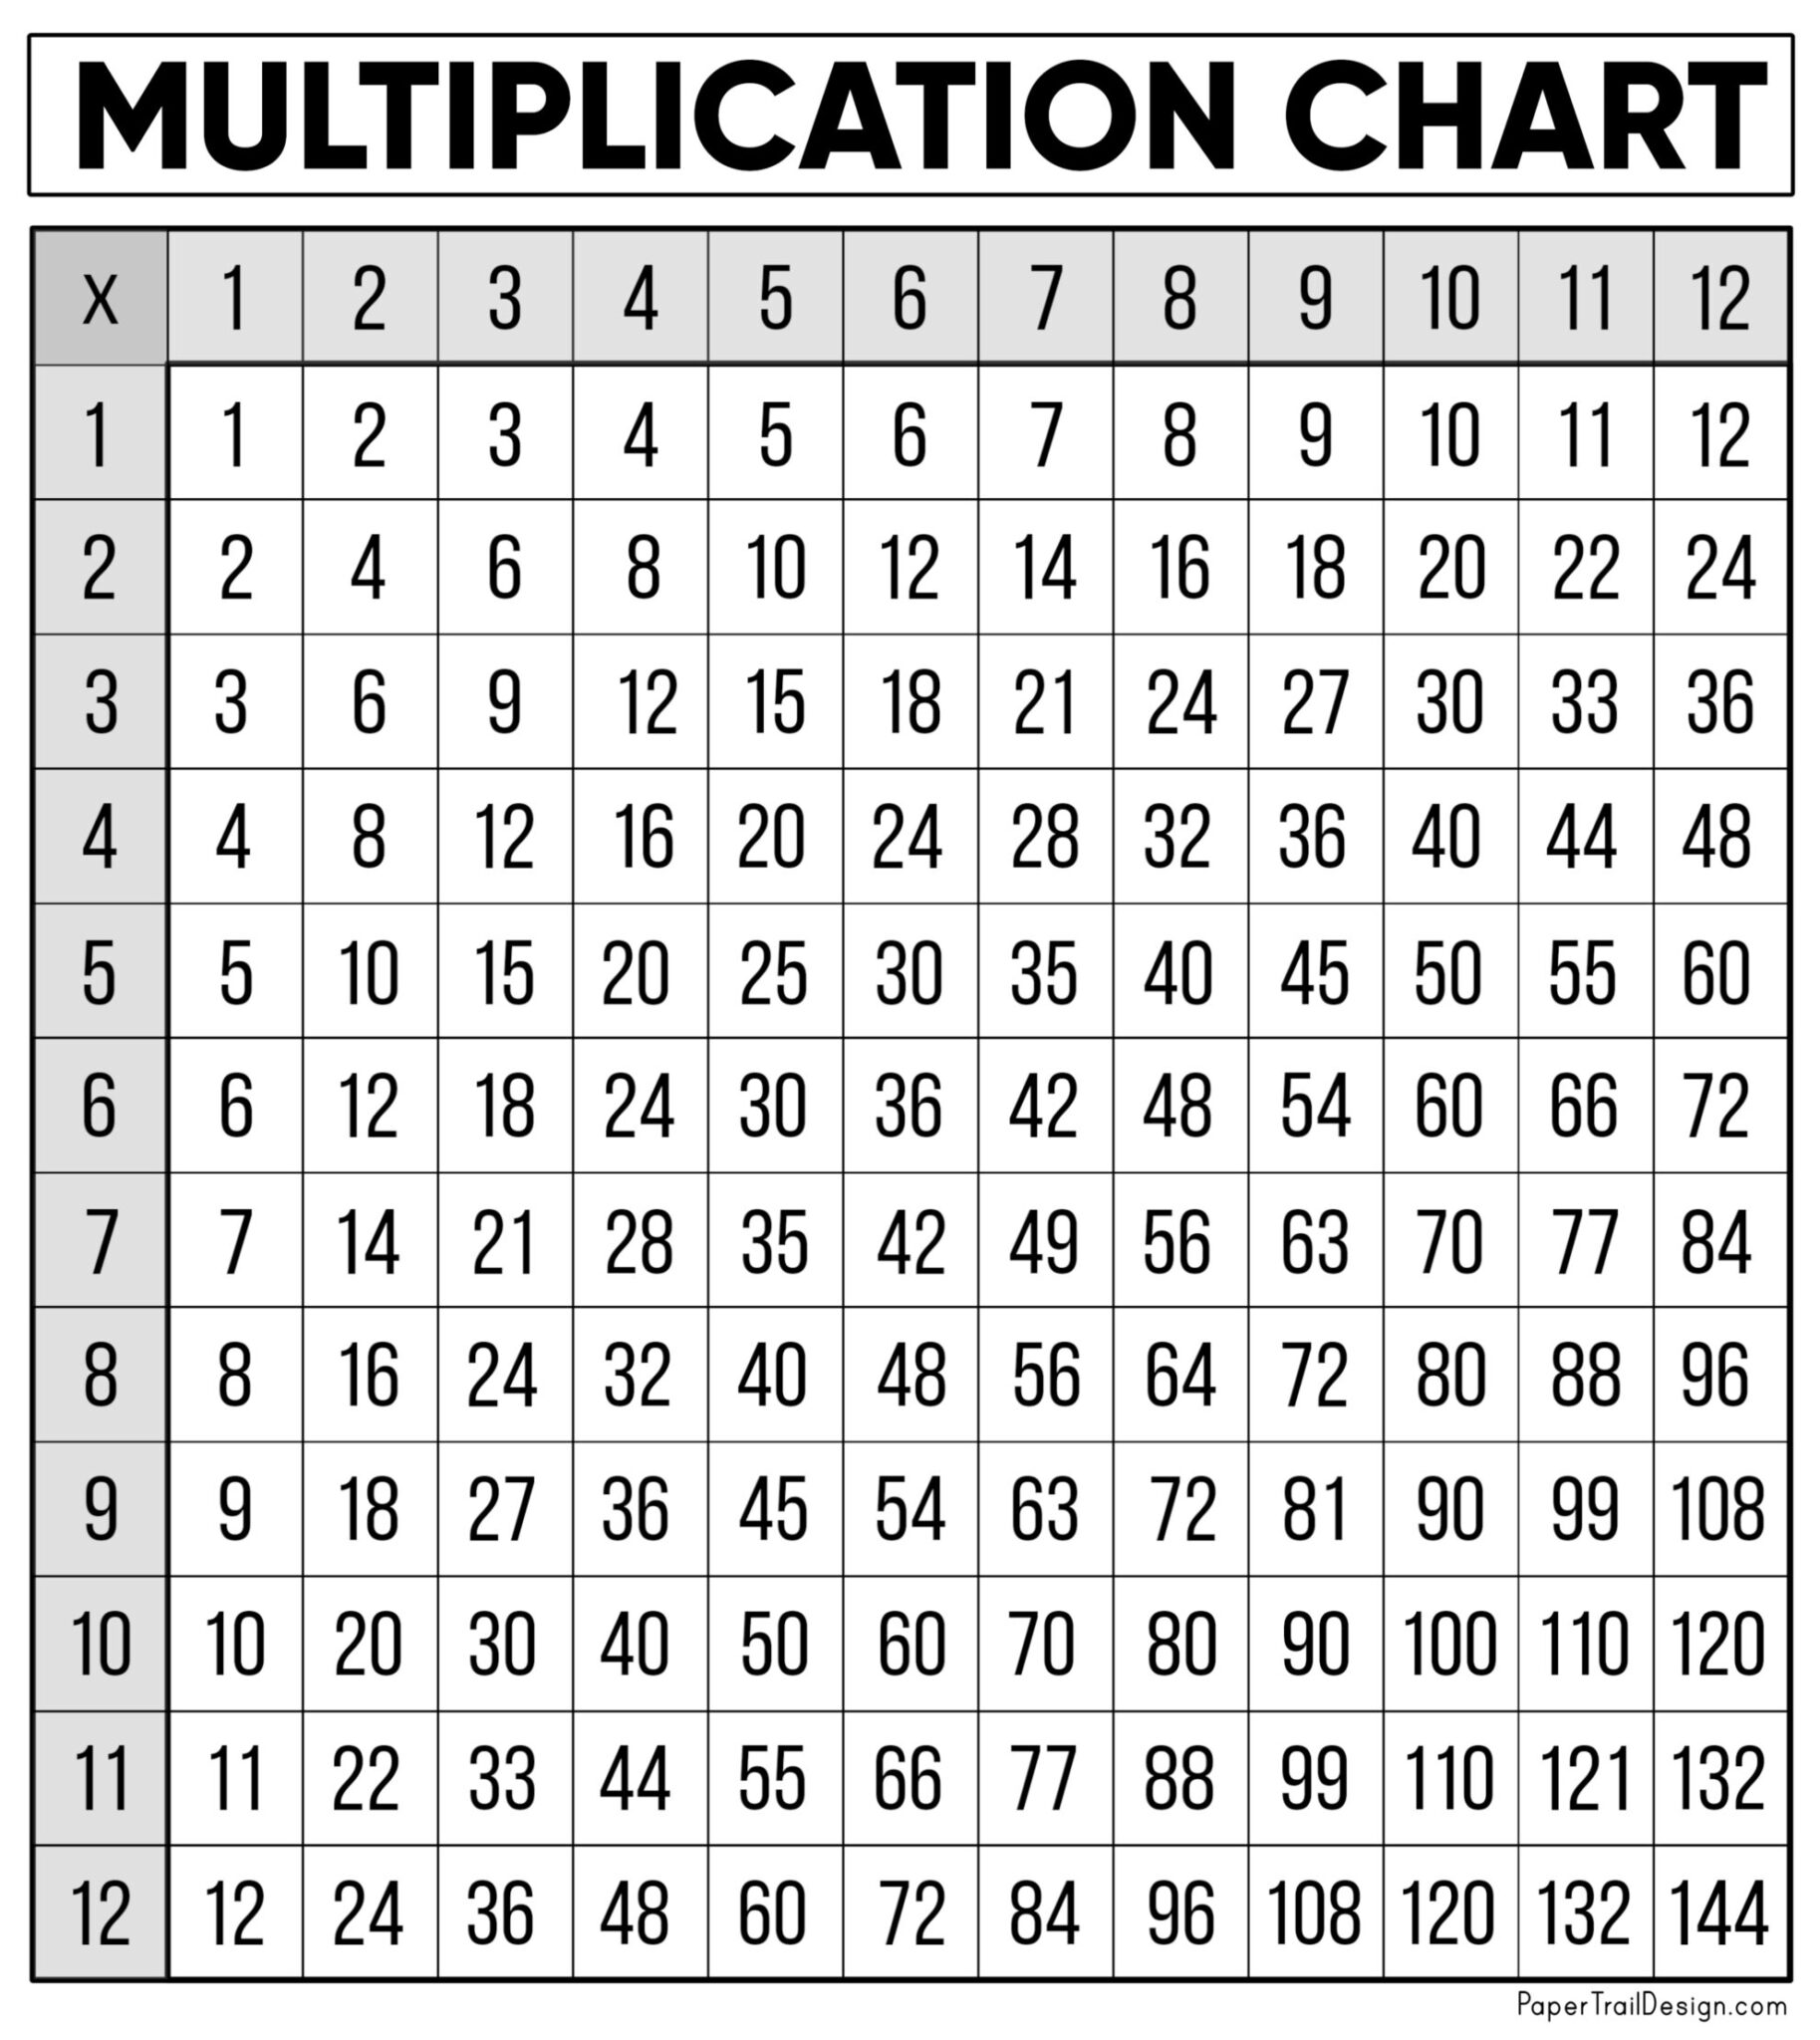 free print multiplication chart kids